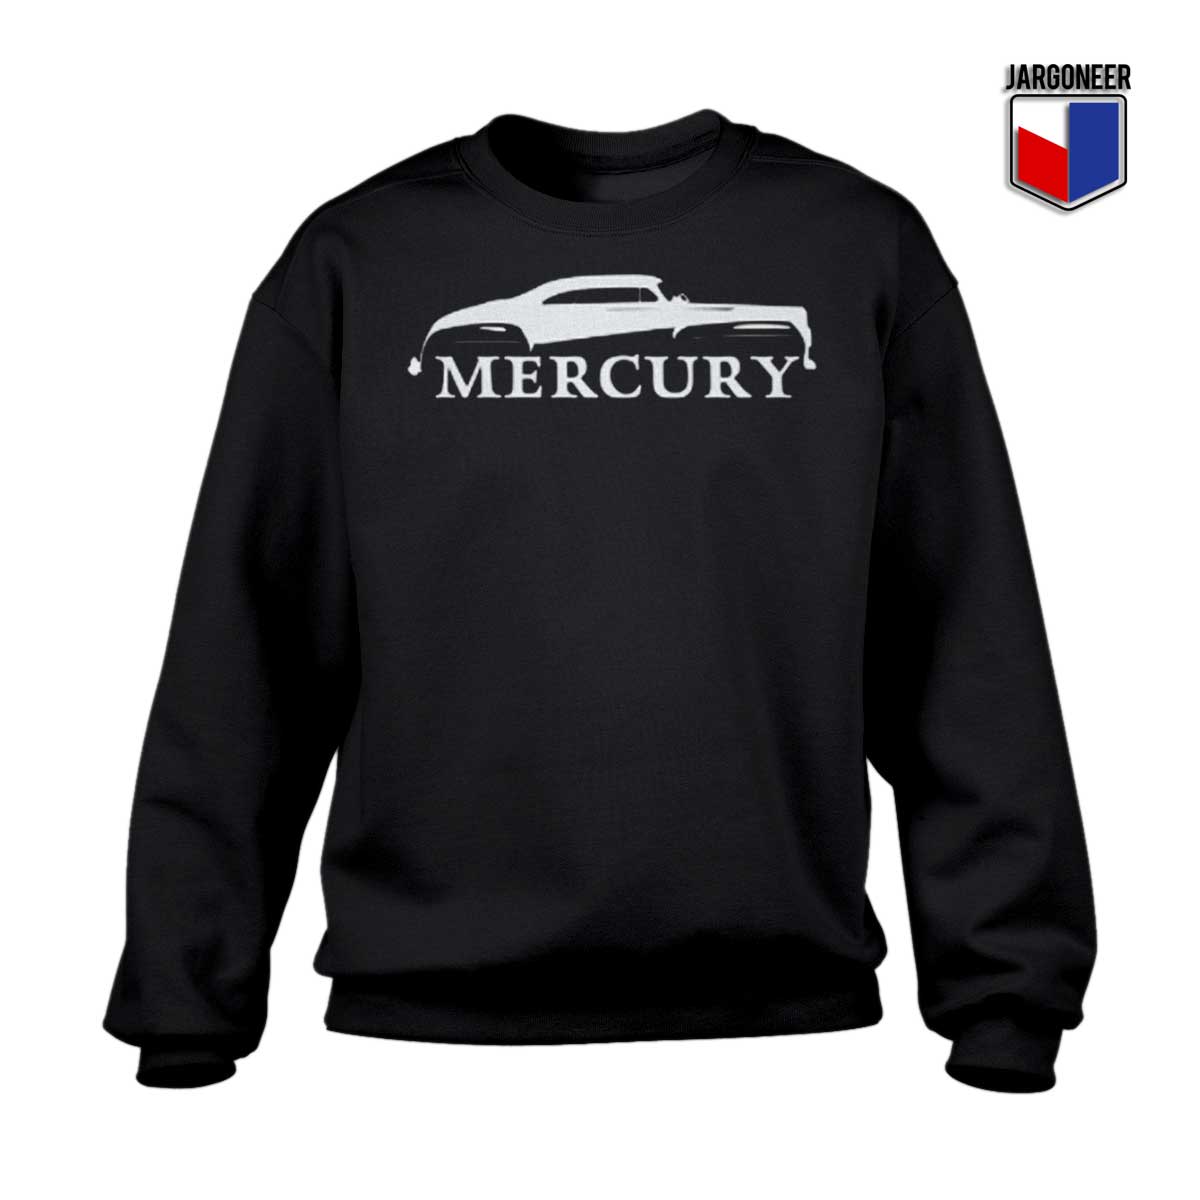 Mercury Classic Sweatshirt - Shop Unique Graphic Cool Shirt Designs